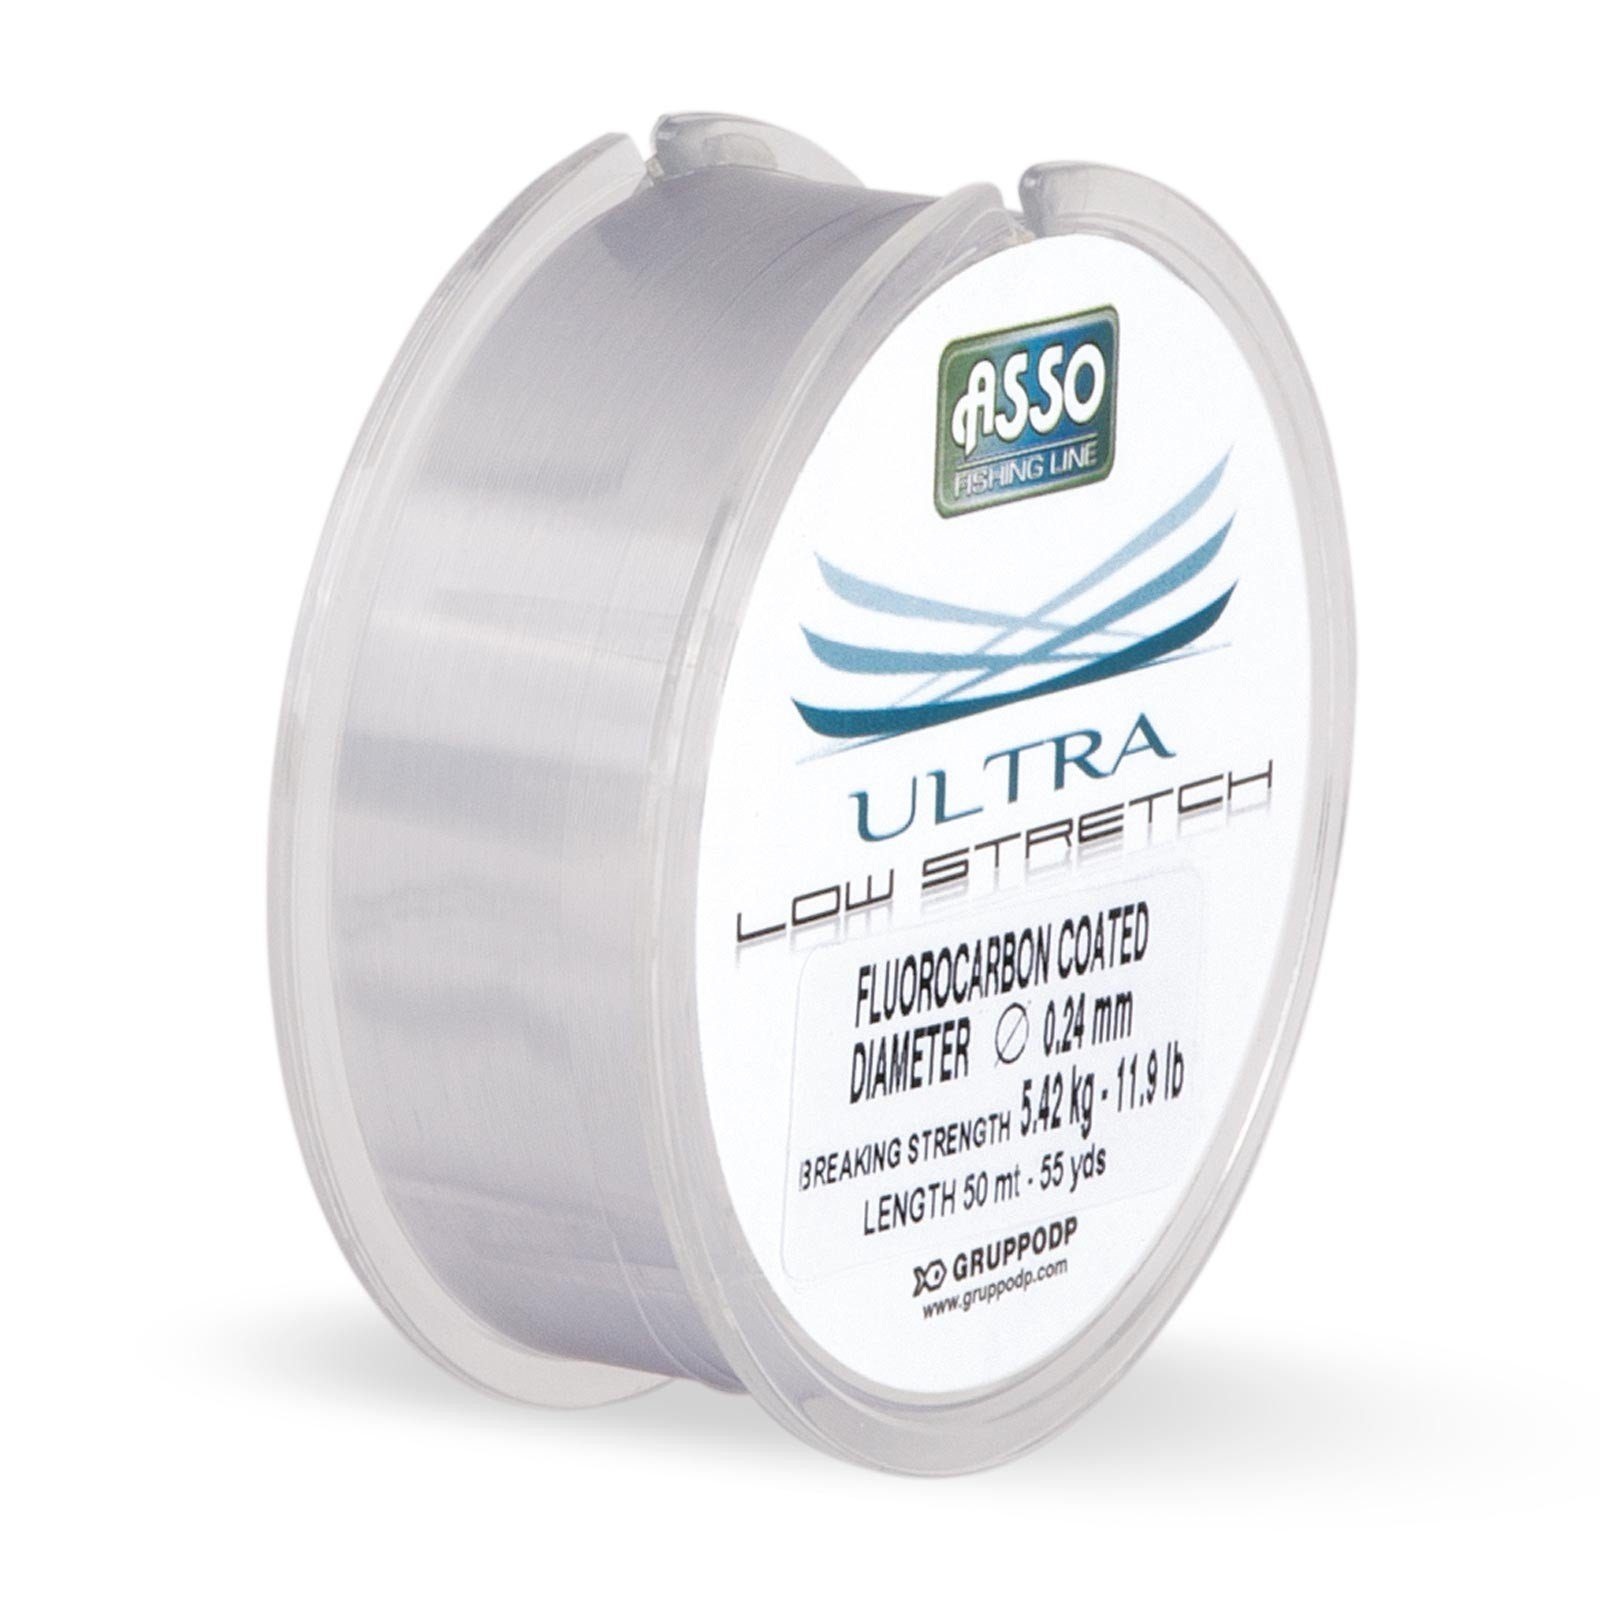 ASSO Angelschnur, 150 m Länge, ASSO UltraLow Stretch Fluorocarbon Coated 150m 0,26mm 6,59kg Clear Angelschnur